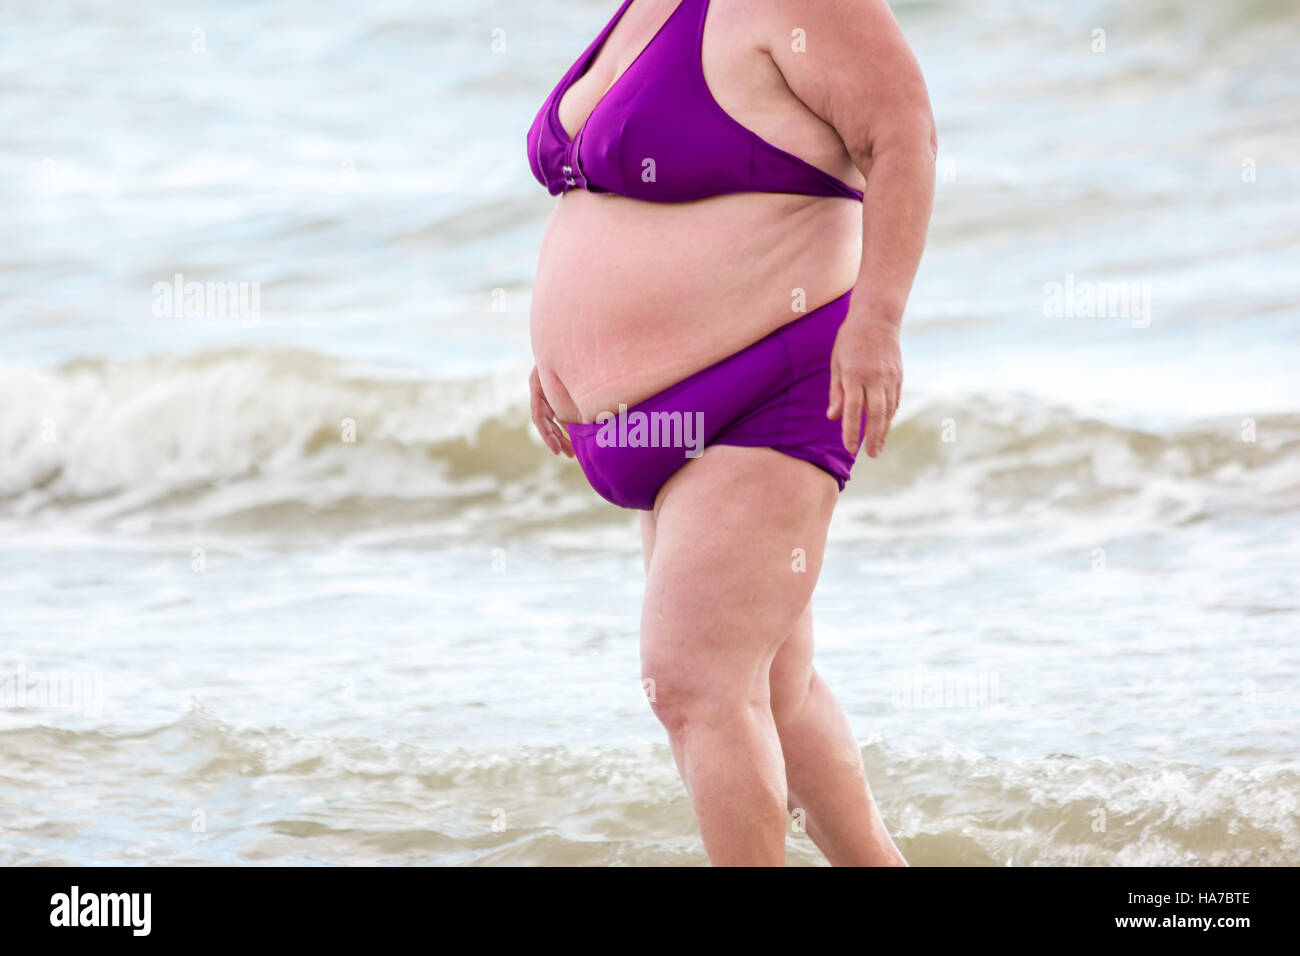 Fat lady on the beach Stock Photo - Alamy